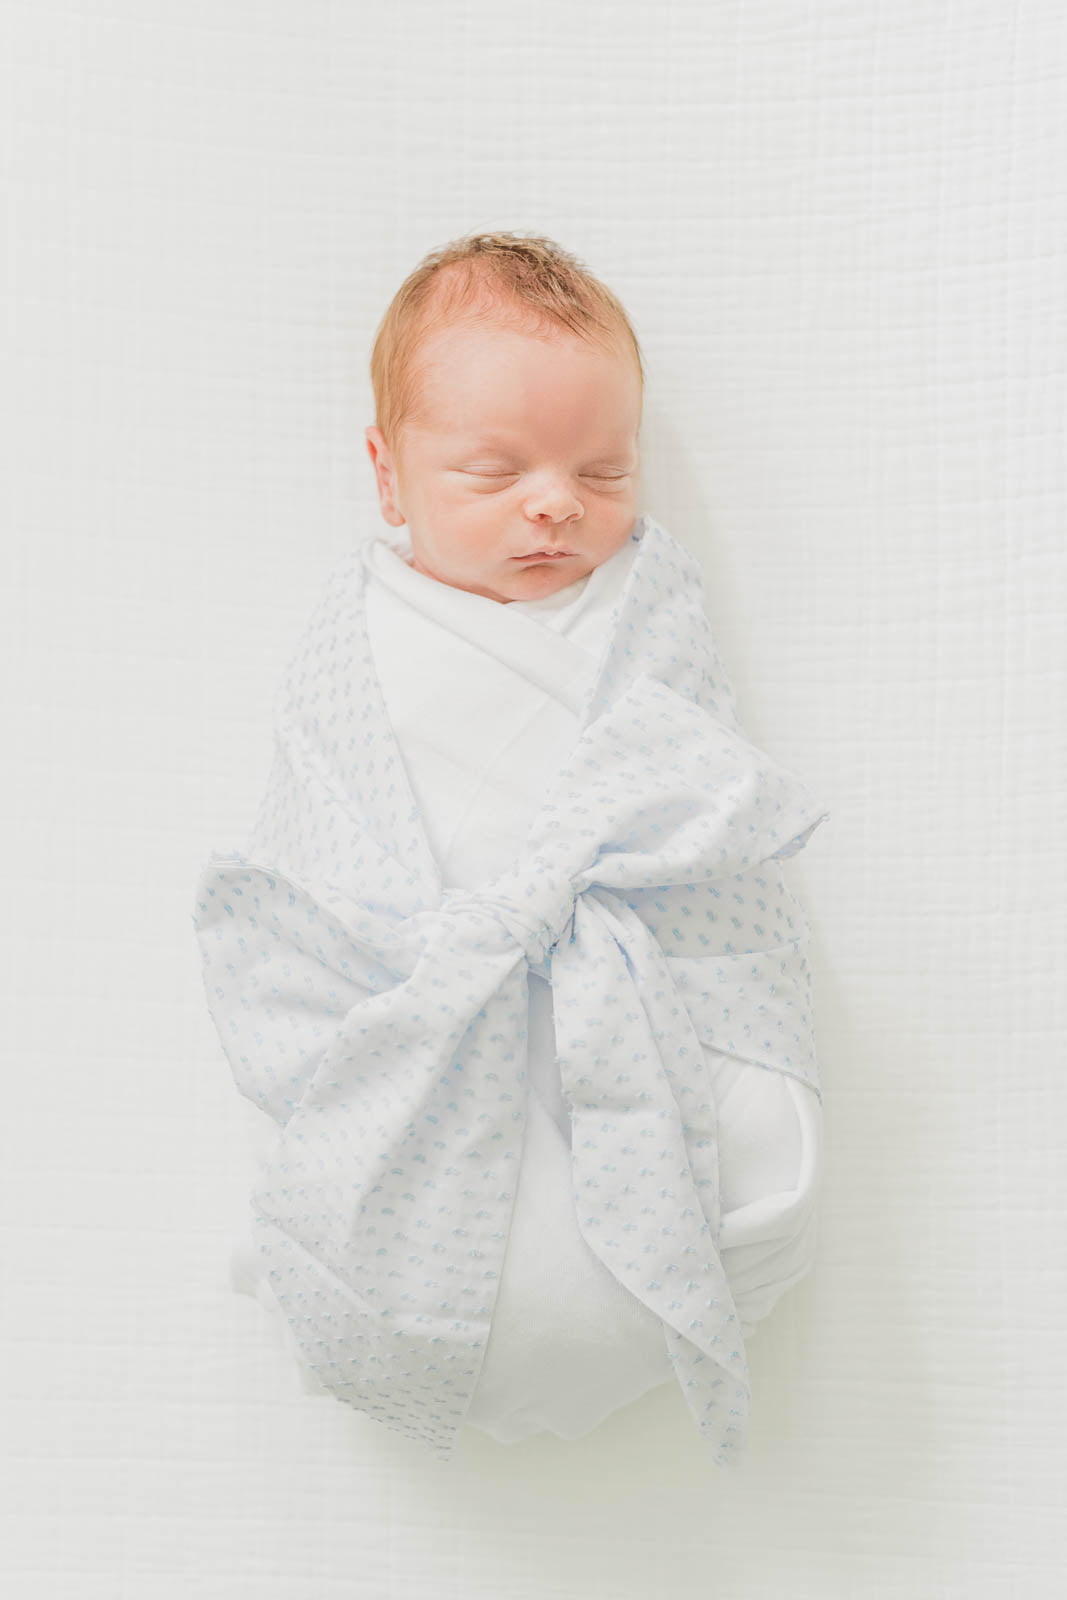 Chicago Family Newborn Photographer - Angela Williams_A_06302023_2245-Edit.jpg